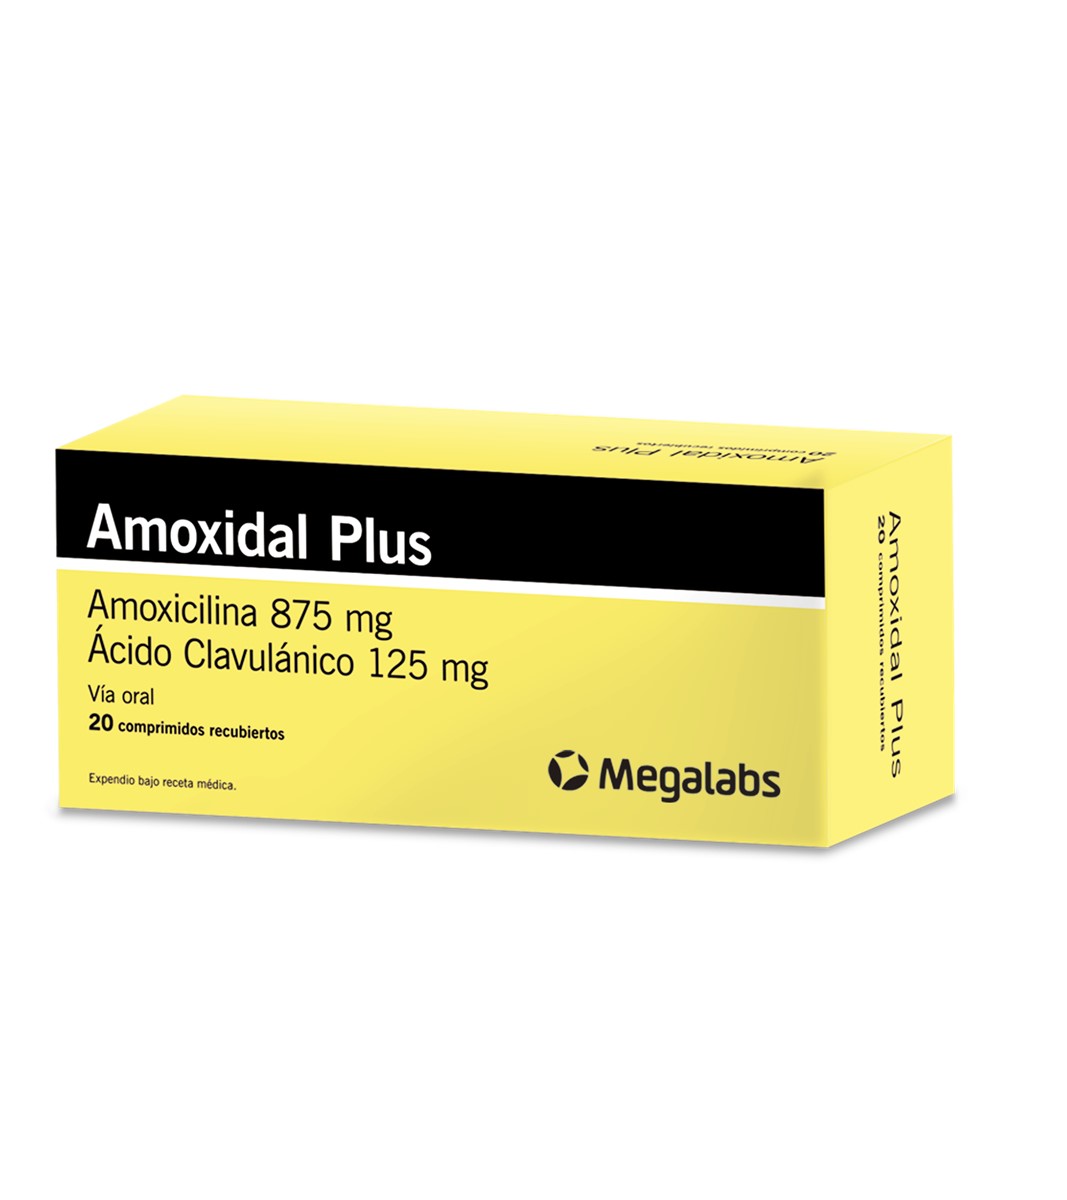 FARMACIA UNIVERSAL - Amoxidal Plus x 20 Comprimidos